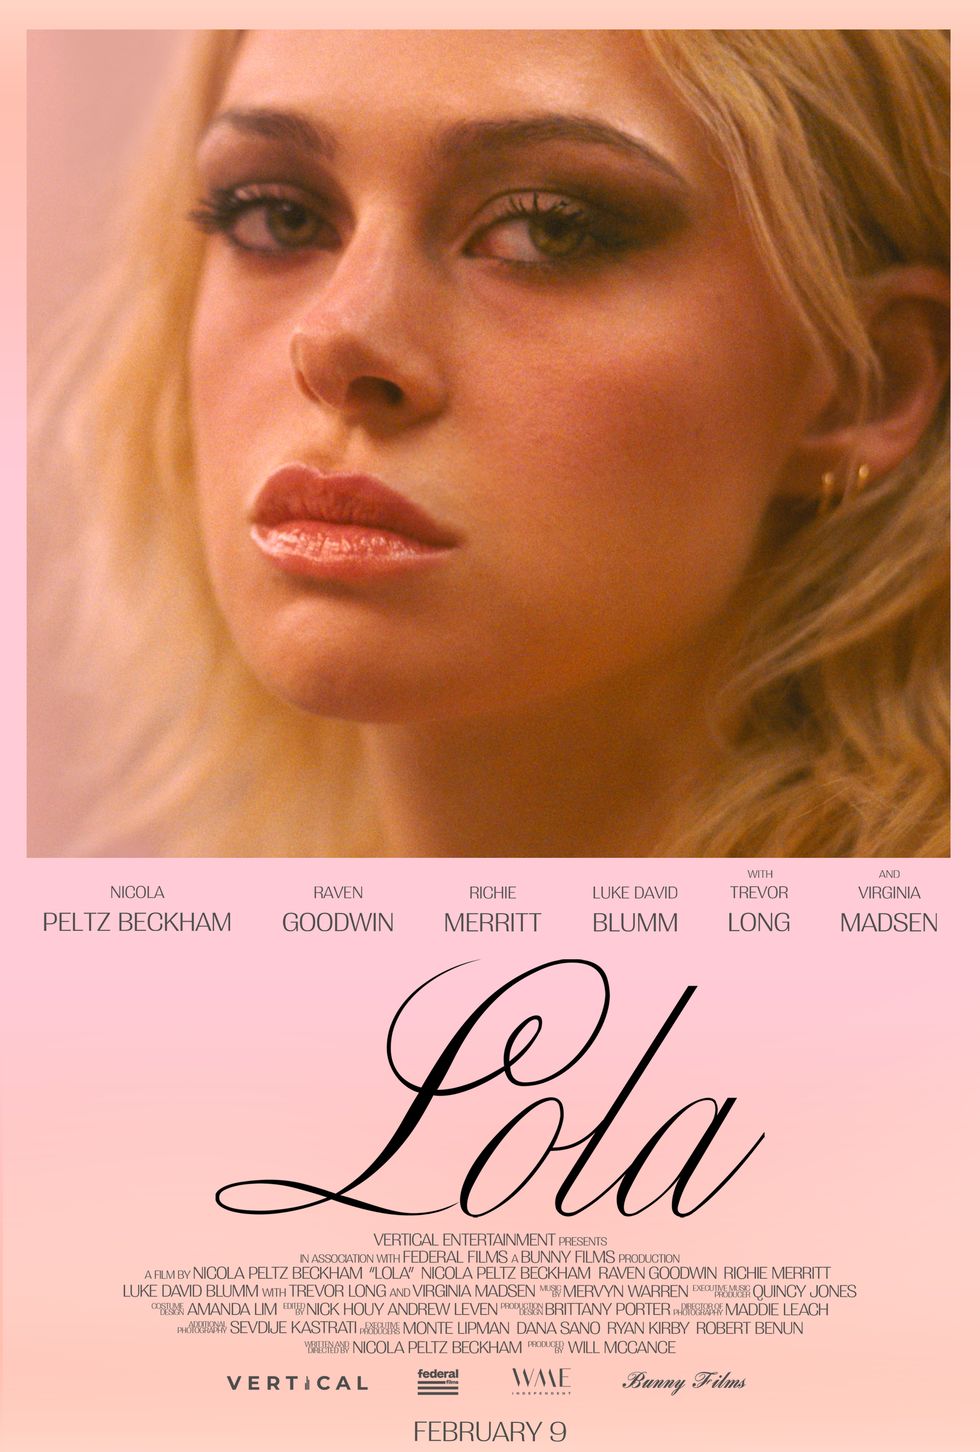 Watch ‘Lola’ Clip Starring Nicola Peltz Beckham and Poster Reveal